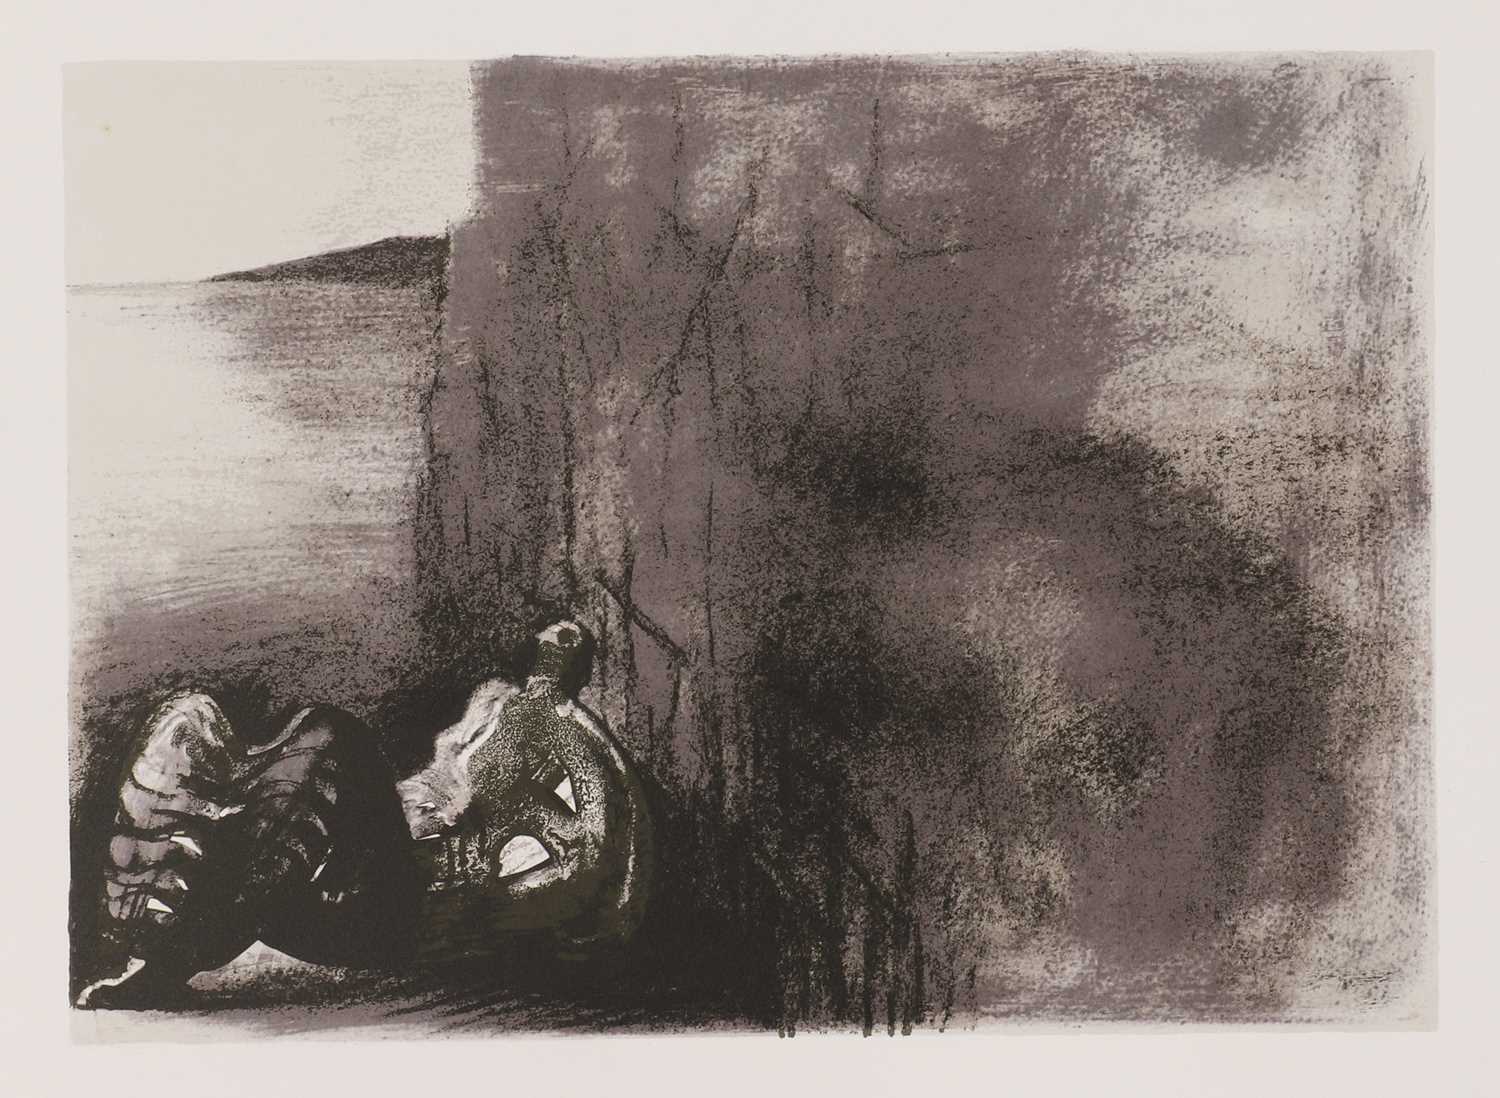 Henry Moore OM CH (1898-1986)